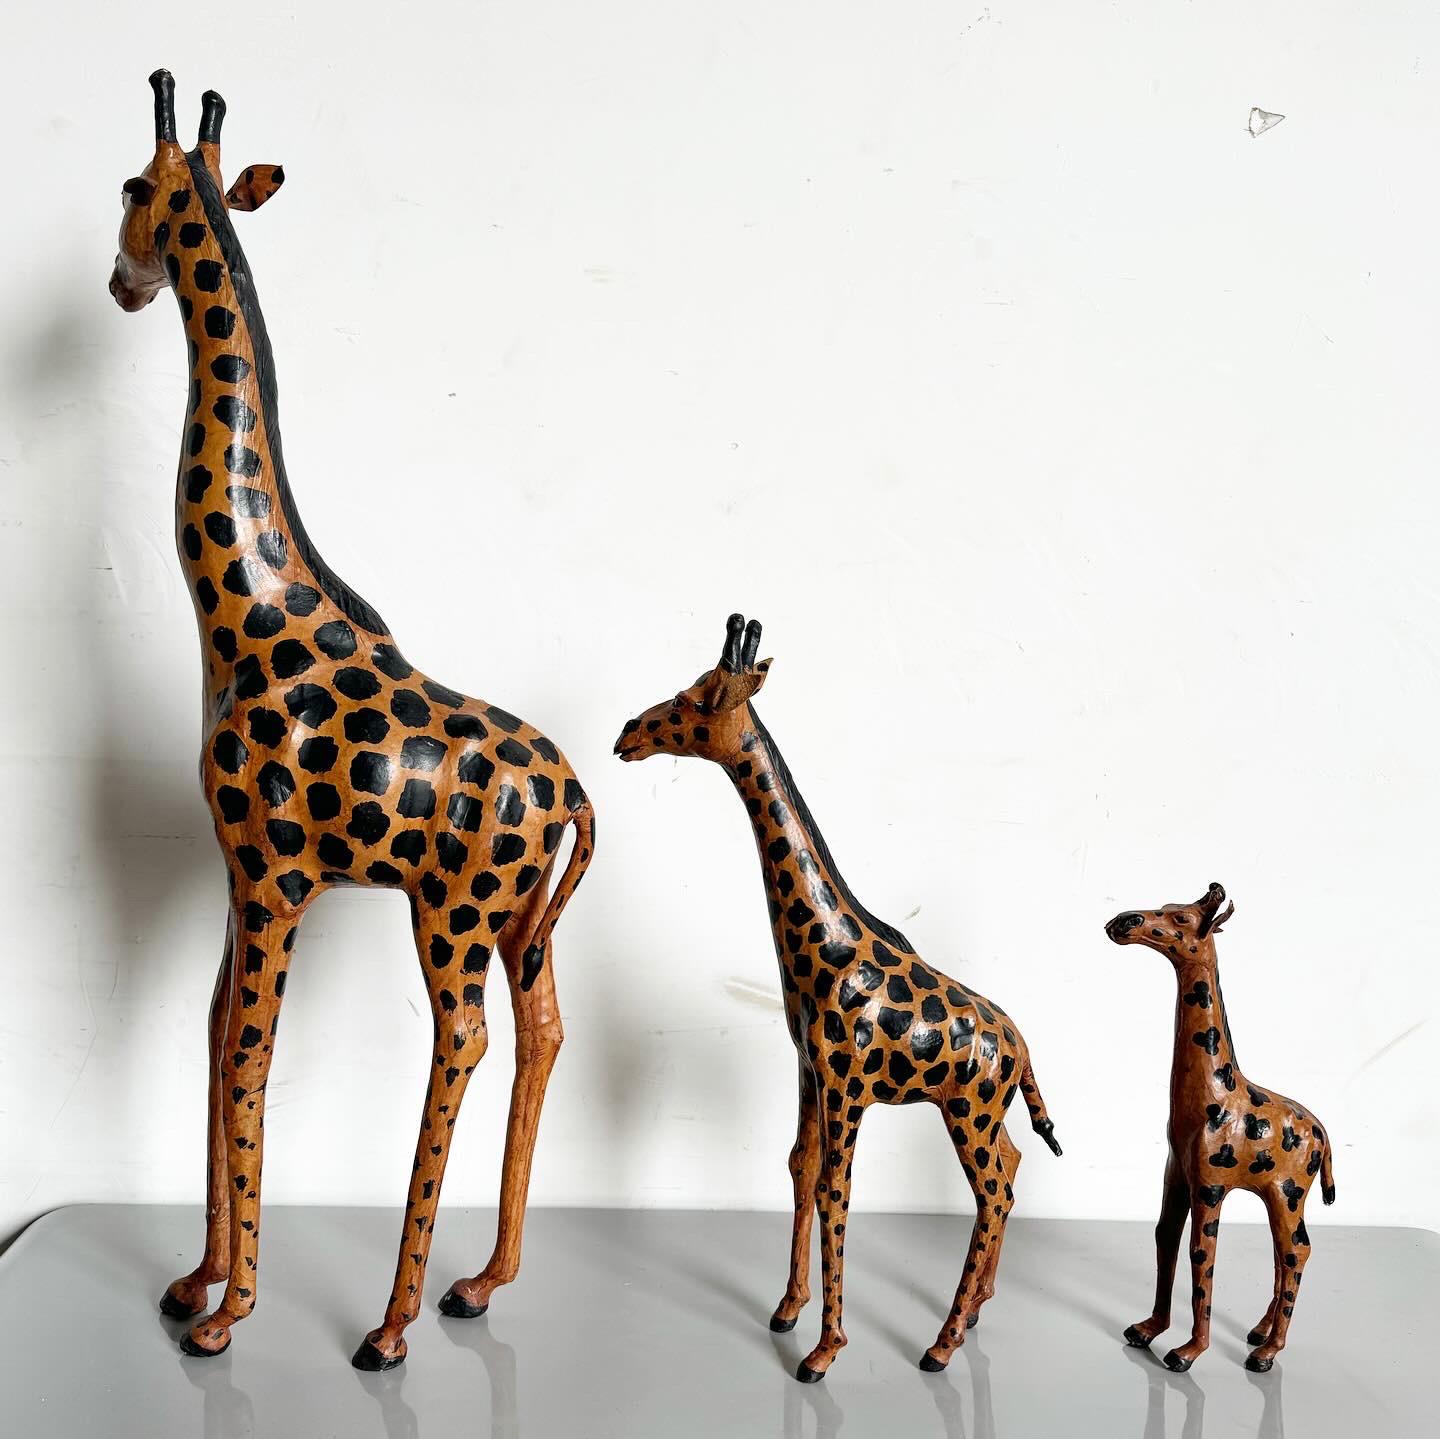 Vintage Ascending Leather Wrapped Giraffe Sculptures - Set of 3 For Sale 2